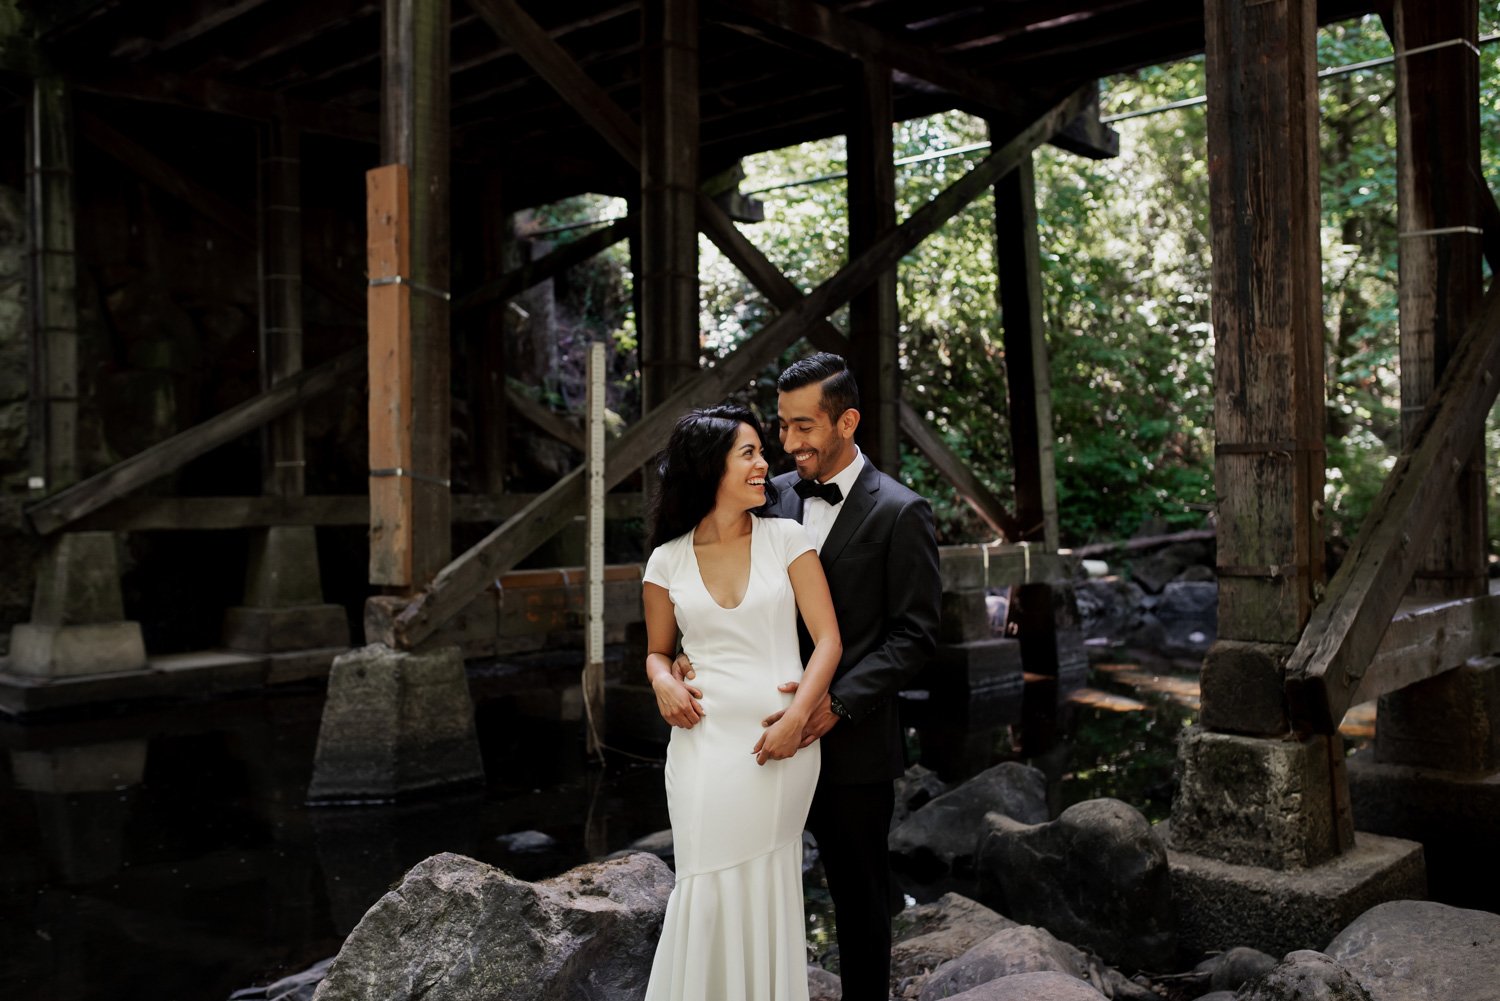 Beautiful Summer Wedding At Leach Botanical Garden